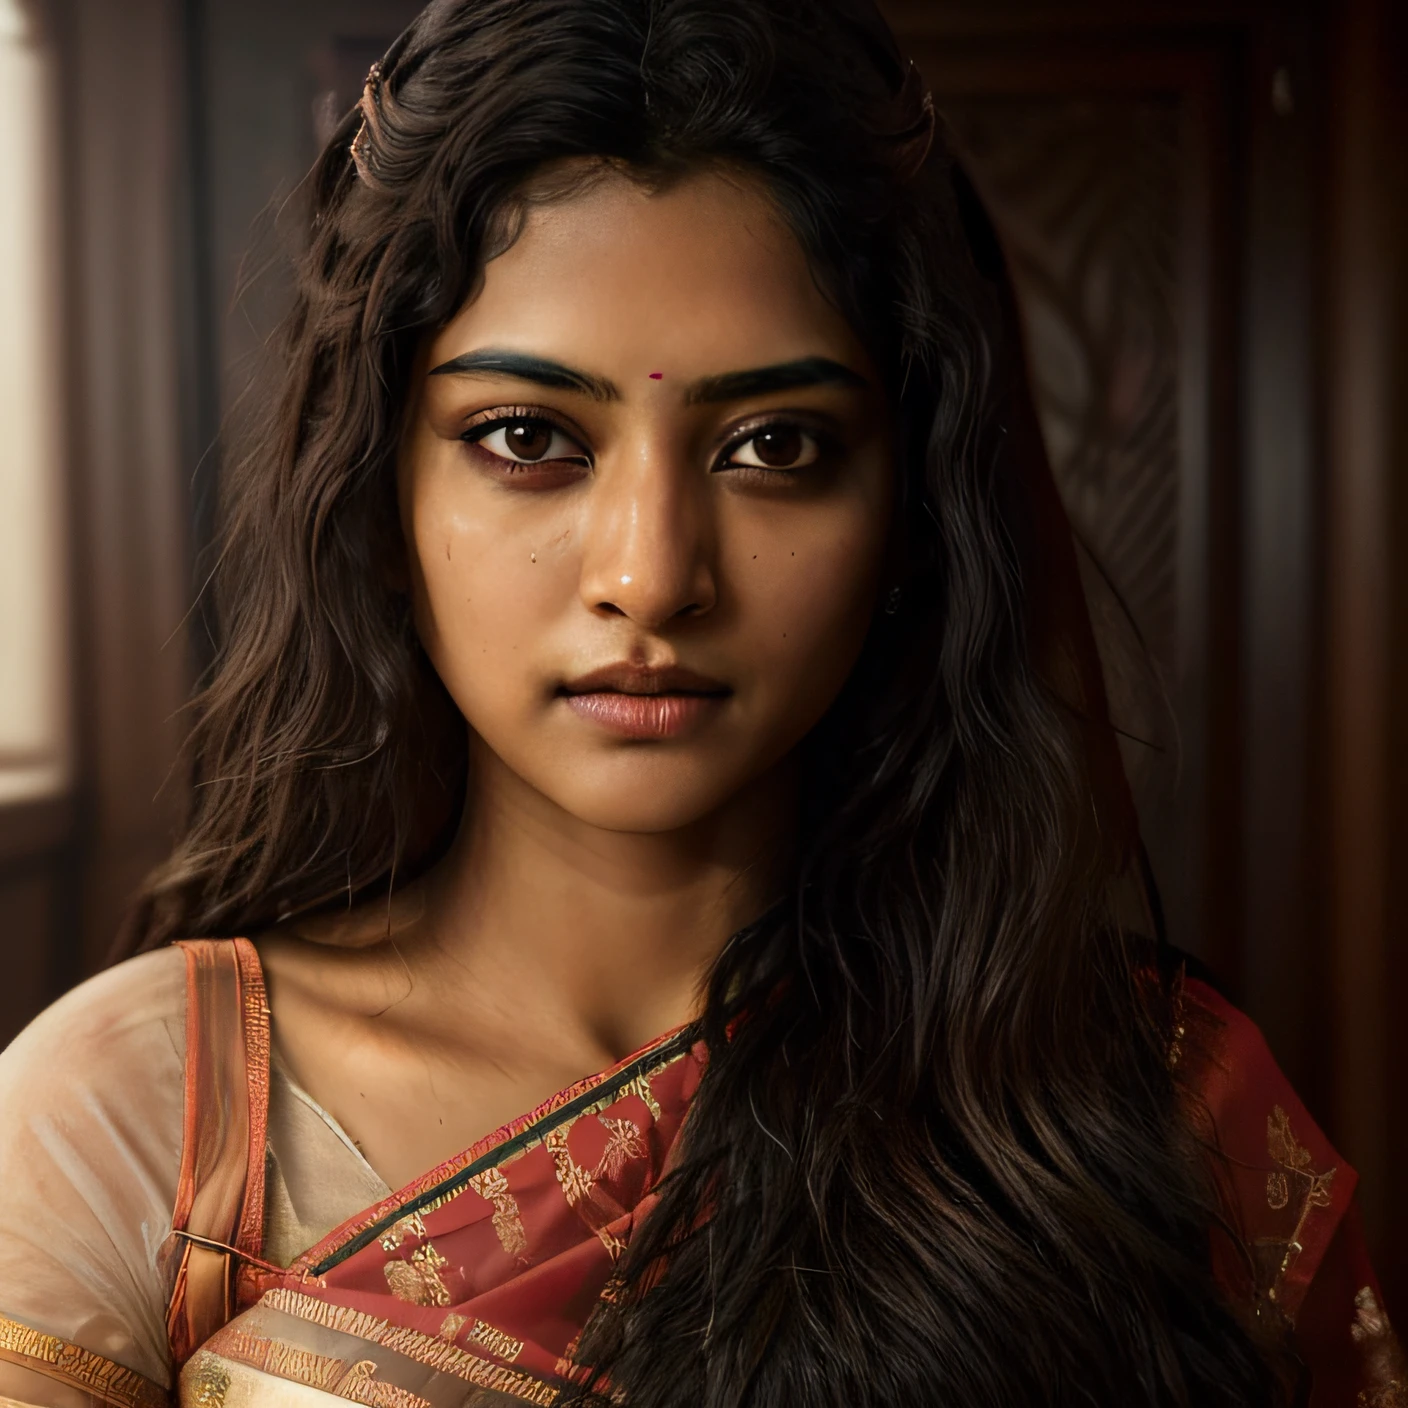 Btflindngds, a beautiful Indian girl, (intricate:0.3) eyes, mid shot, photograph by artgerm and (greg rutkowski:0.3), portrait photo